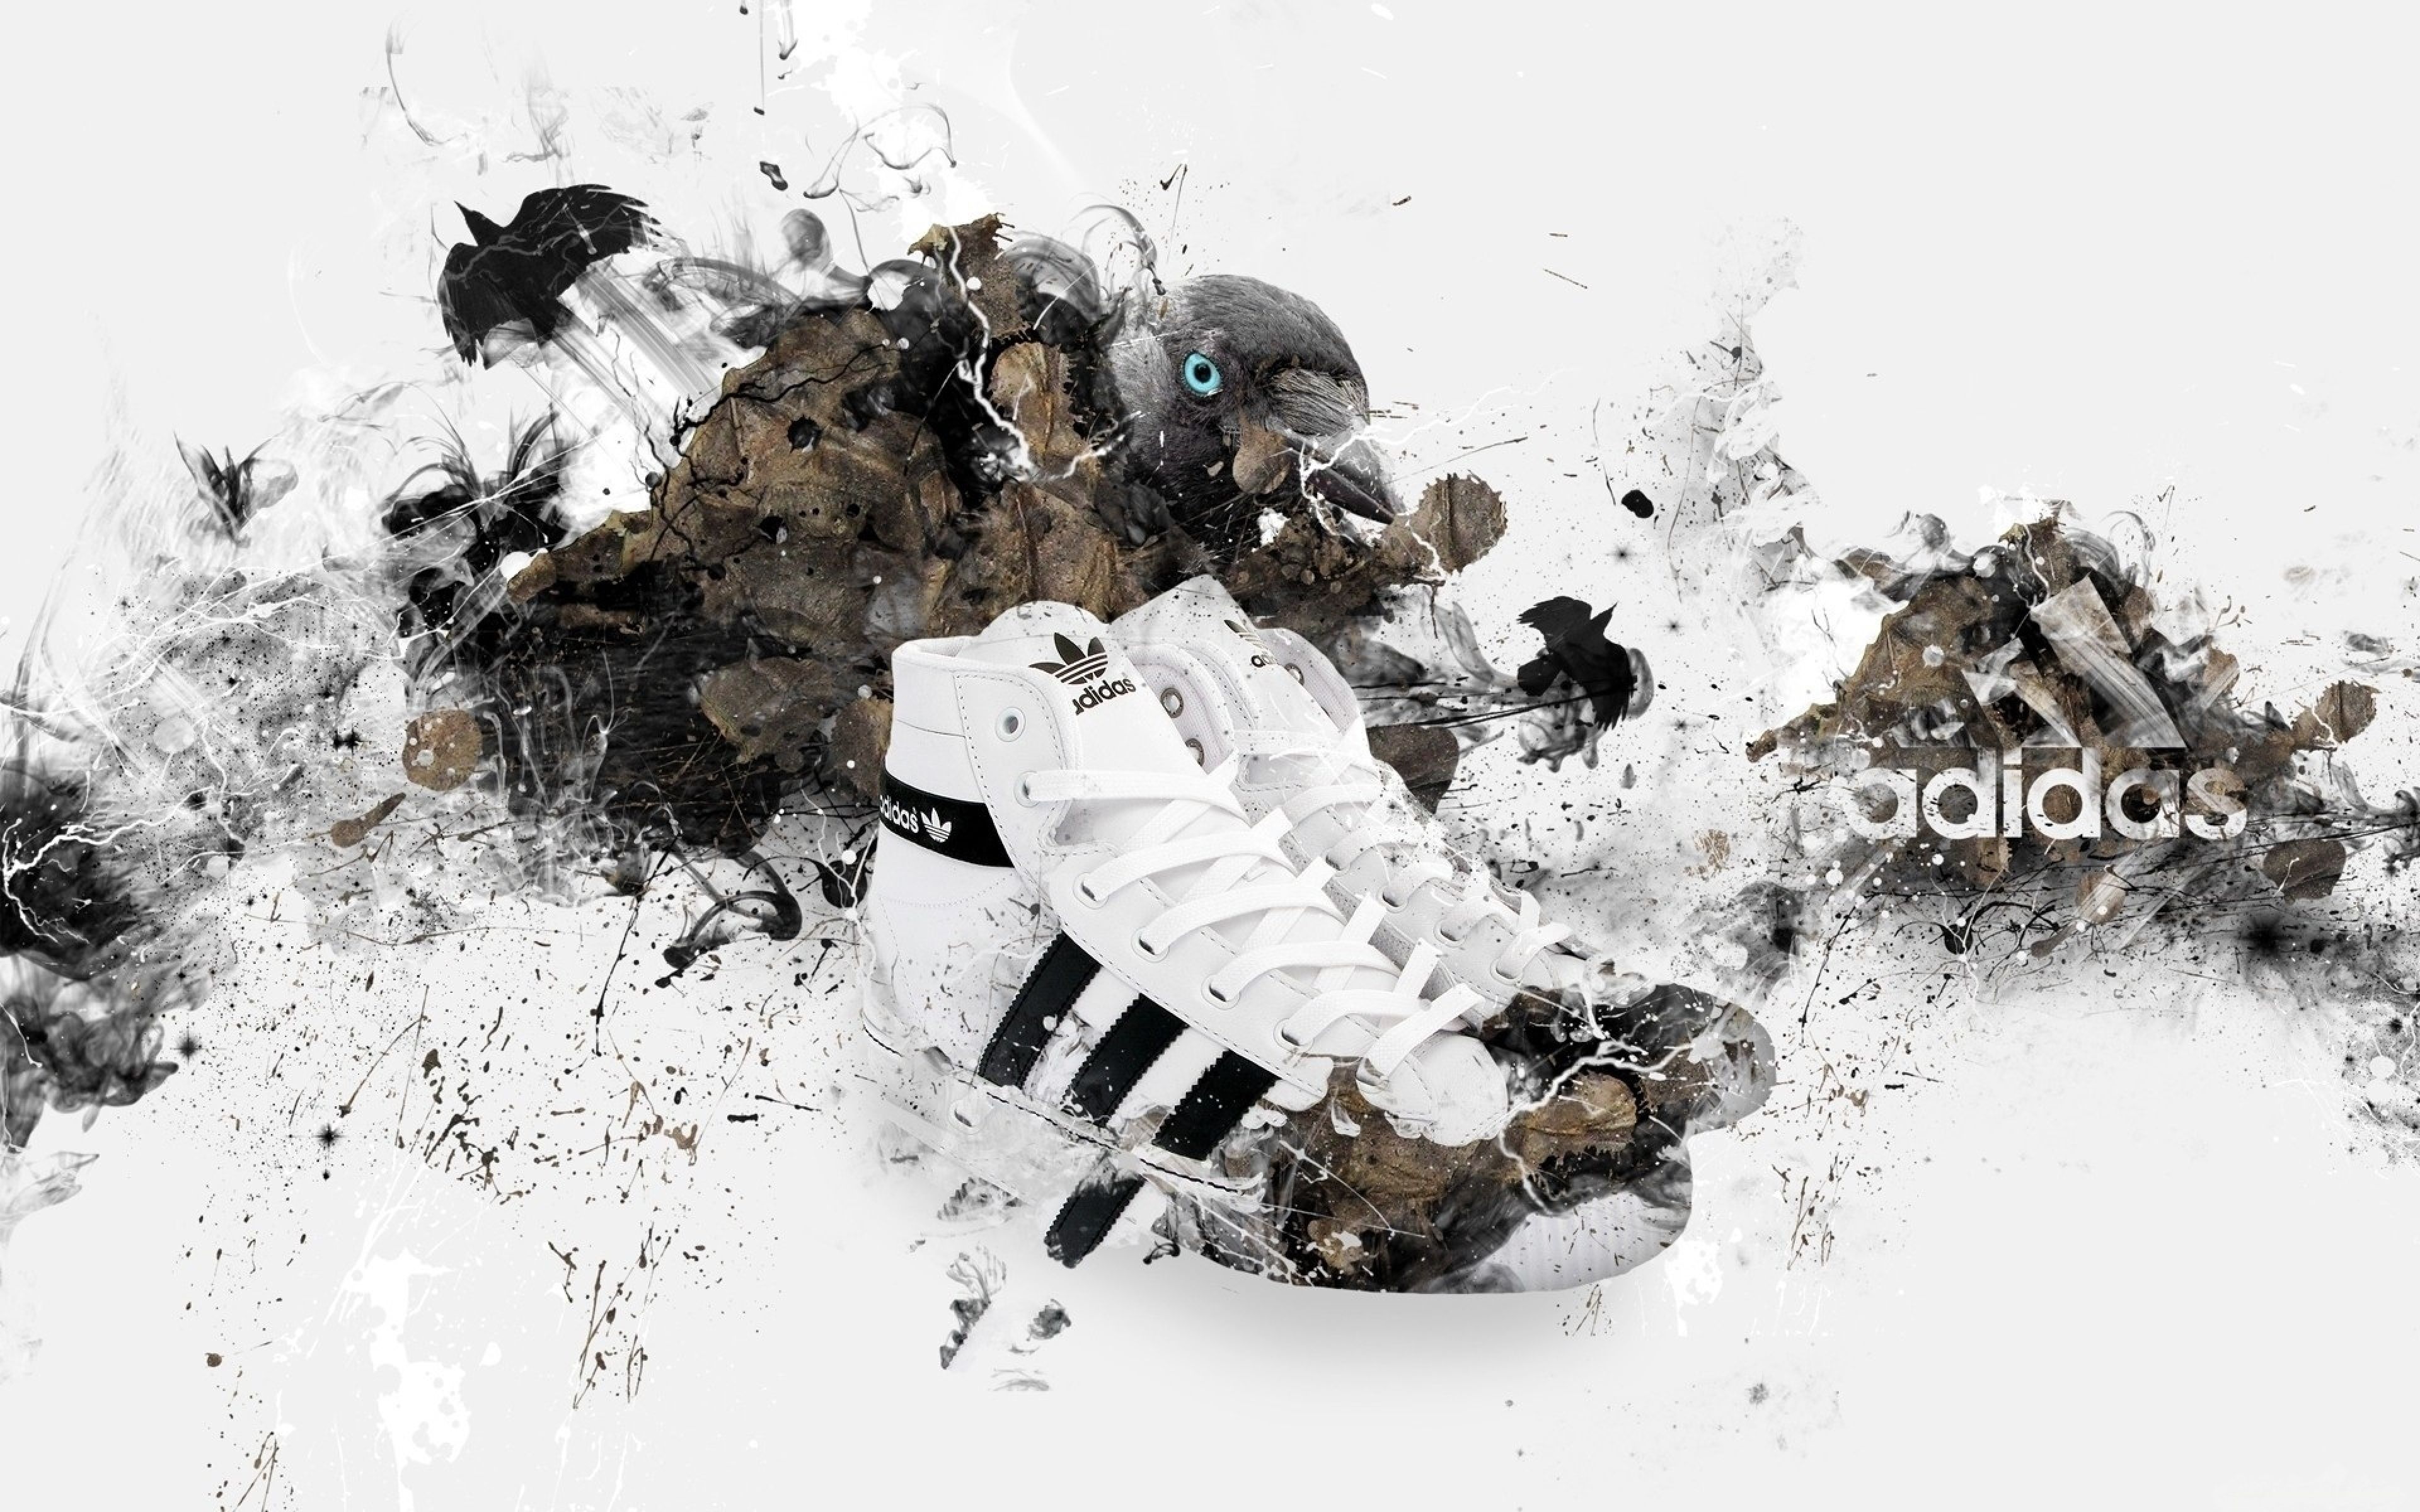 Adidas Shoes Wallpaper